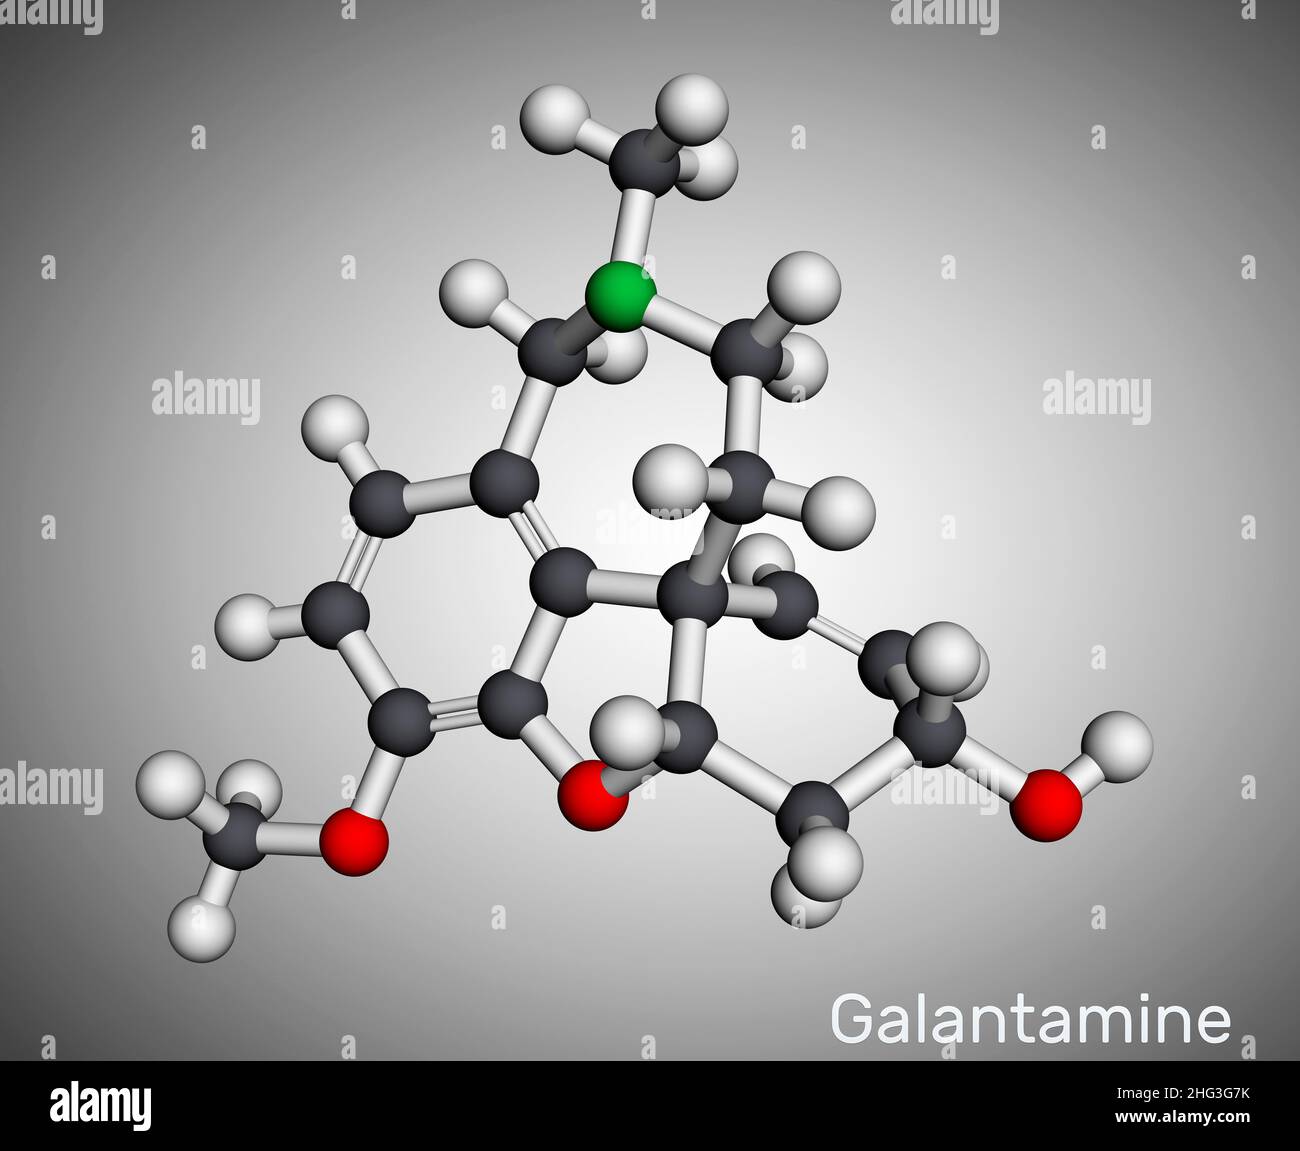 Galantamine, molecule. It is tertiary alkaloid, used to trate dementia, Alzheimer's disease. Molecular model. 3D rendering. Illustration Stock Photo